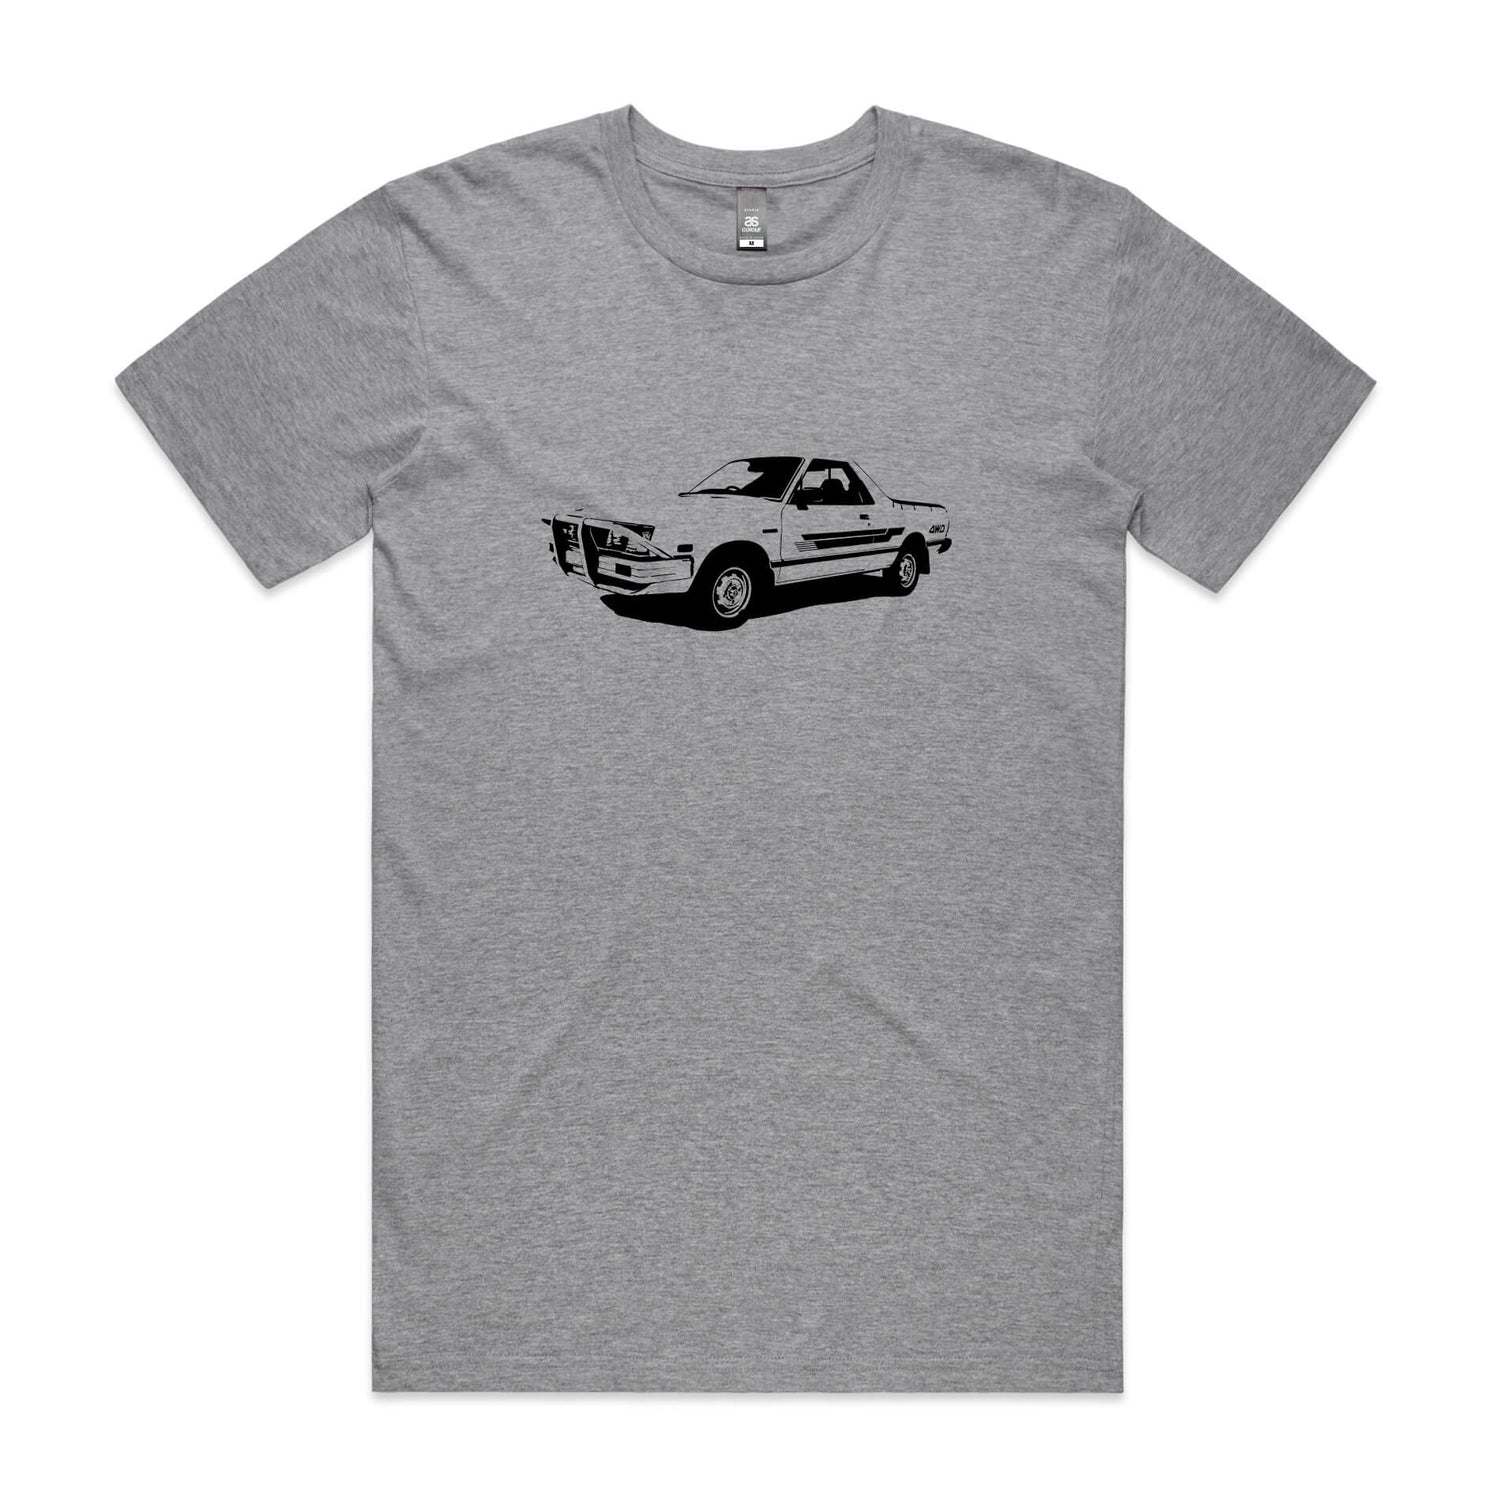 Subaru Brumby t-shirt in grey with black ute graphic